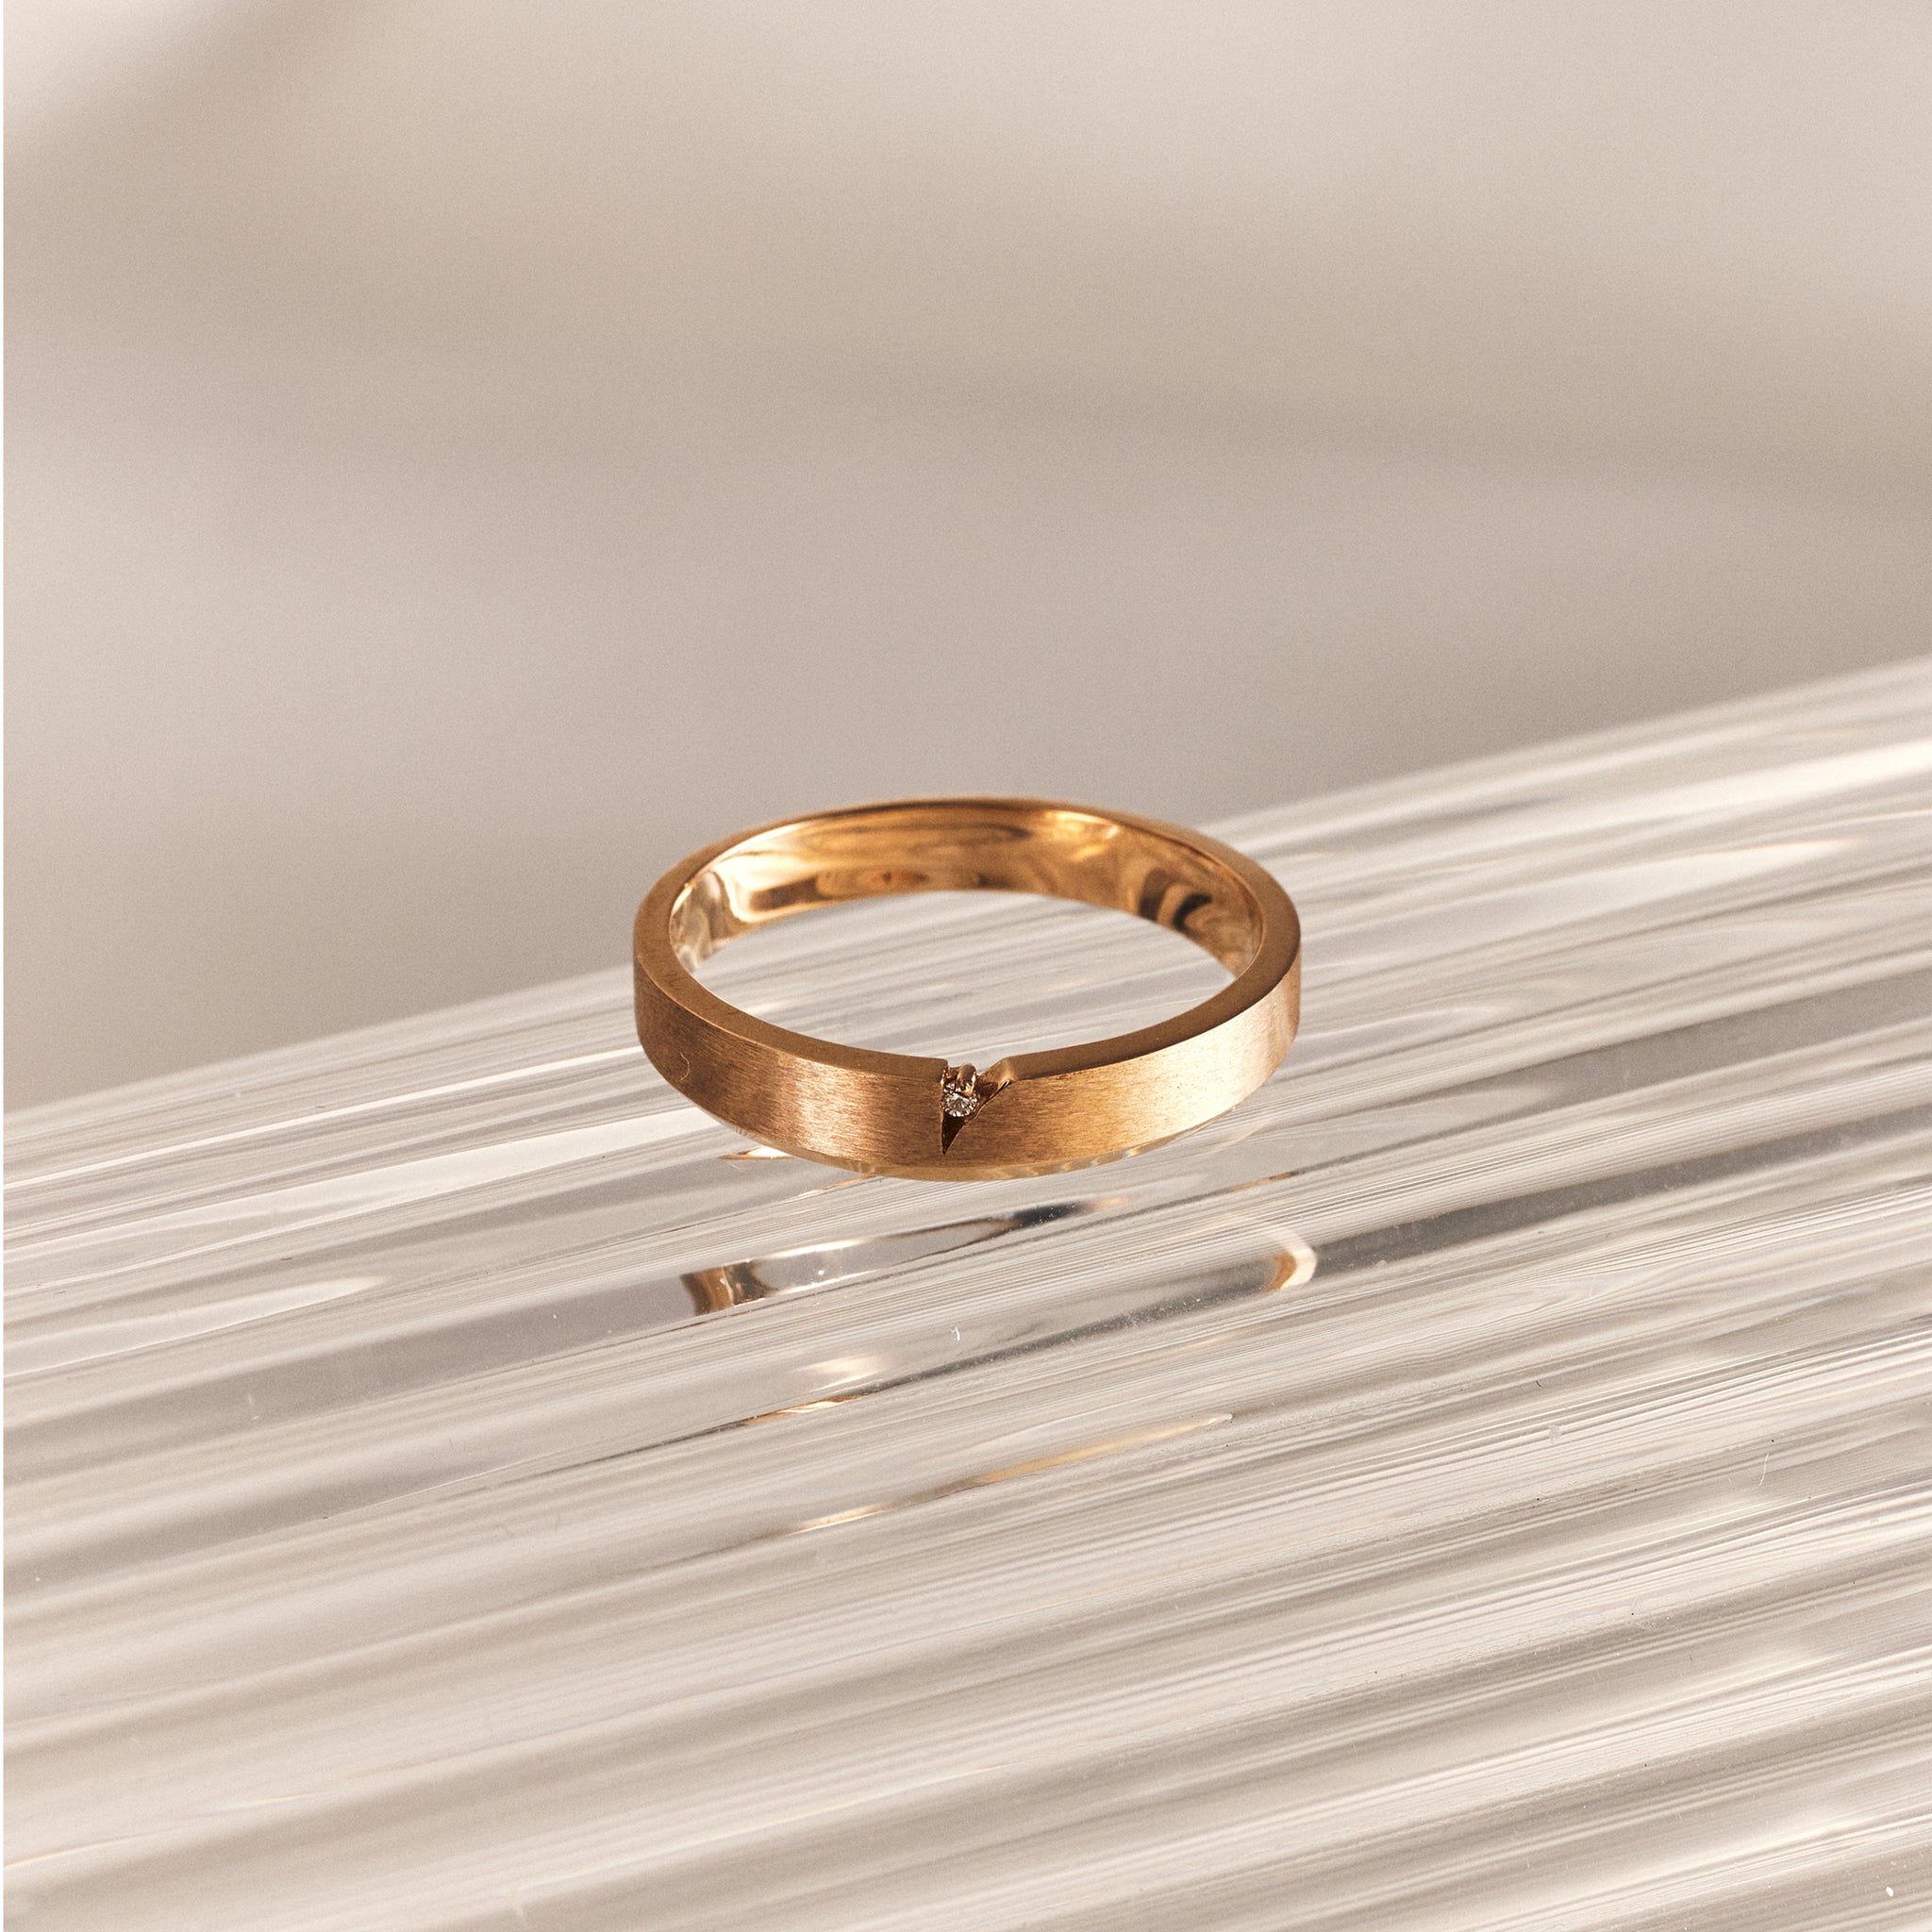 Single beveled edge diamond Ring - 14K/ 18K Gold